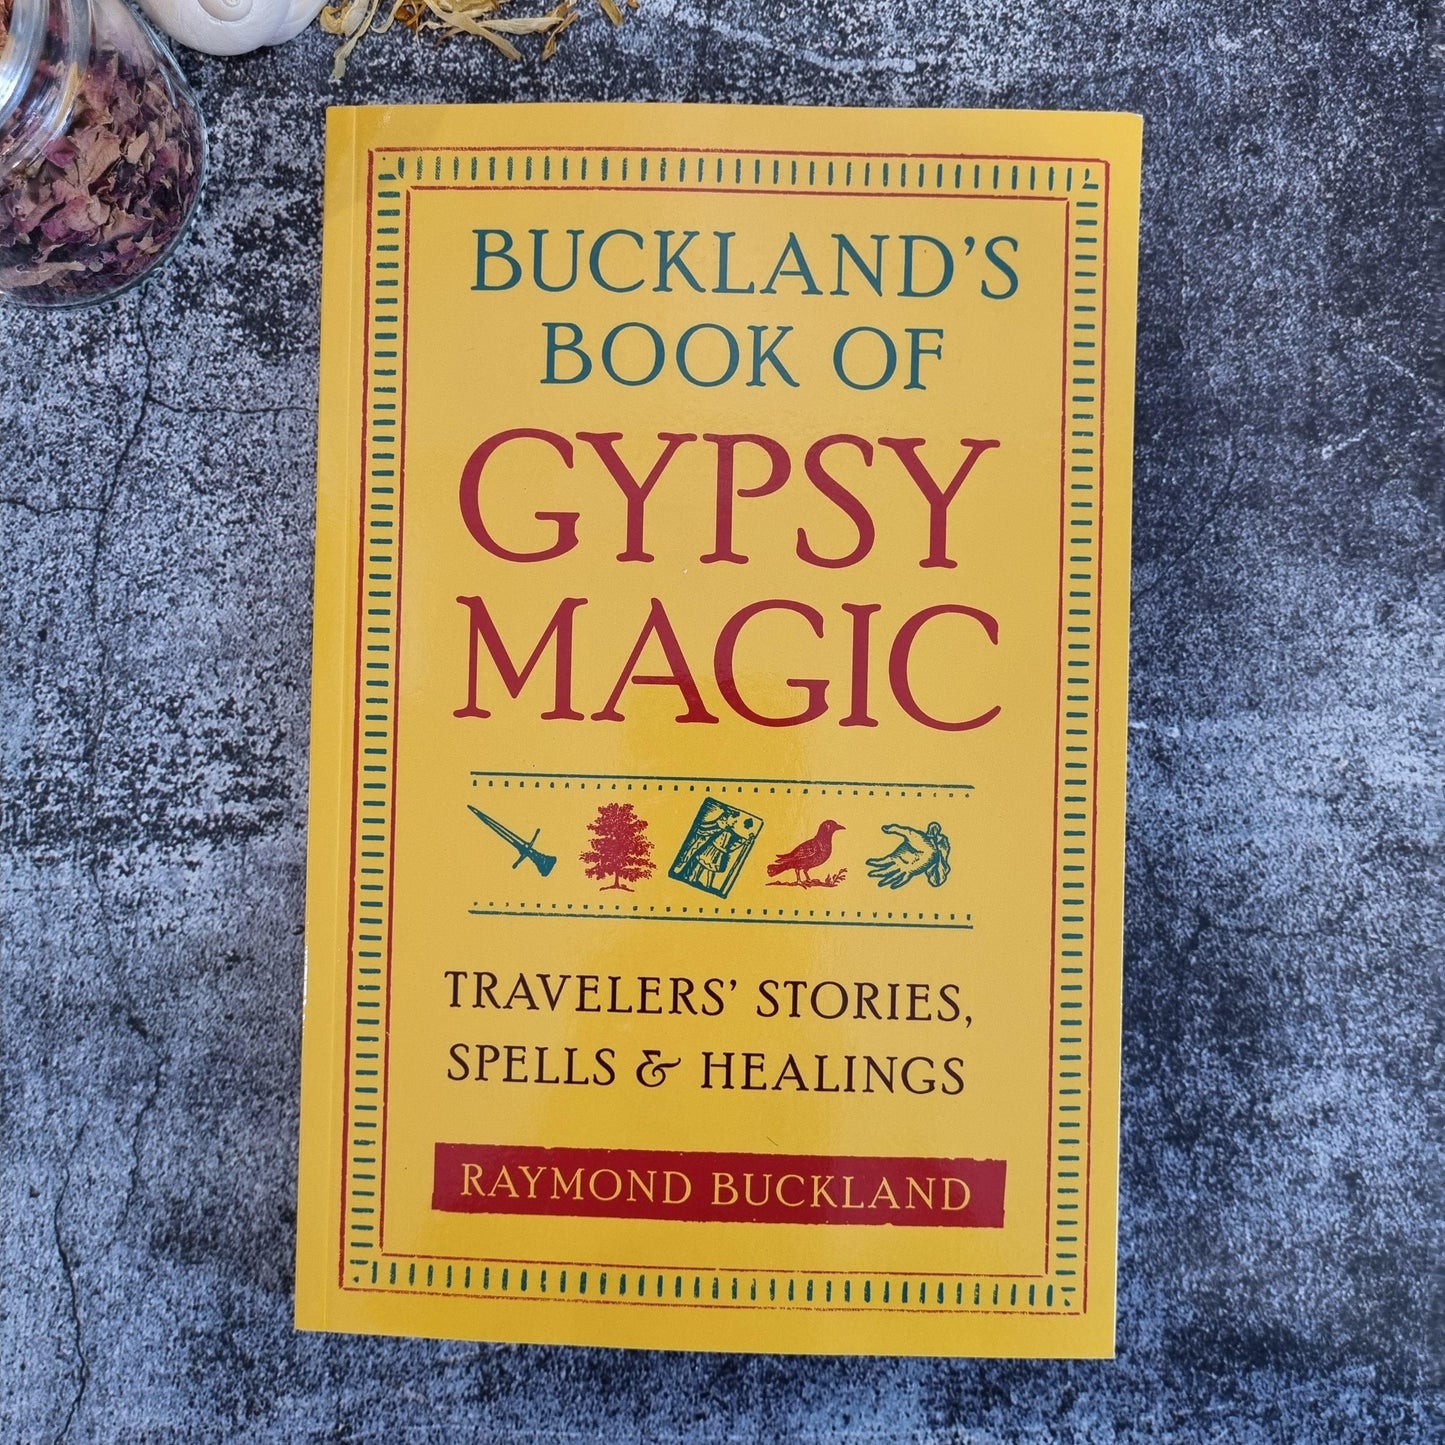 Buckland's Book of Gypsy Magic